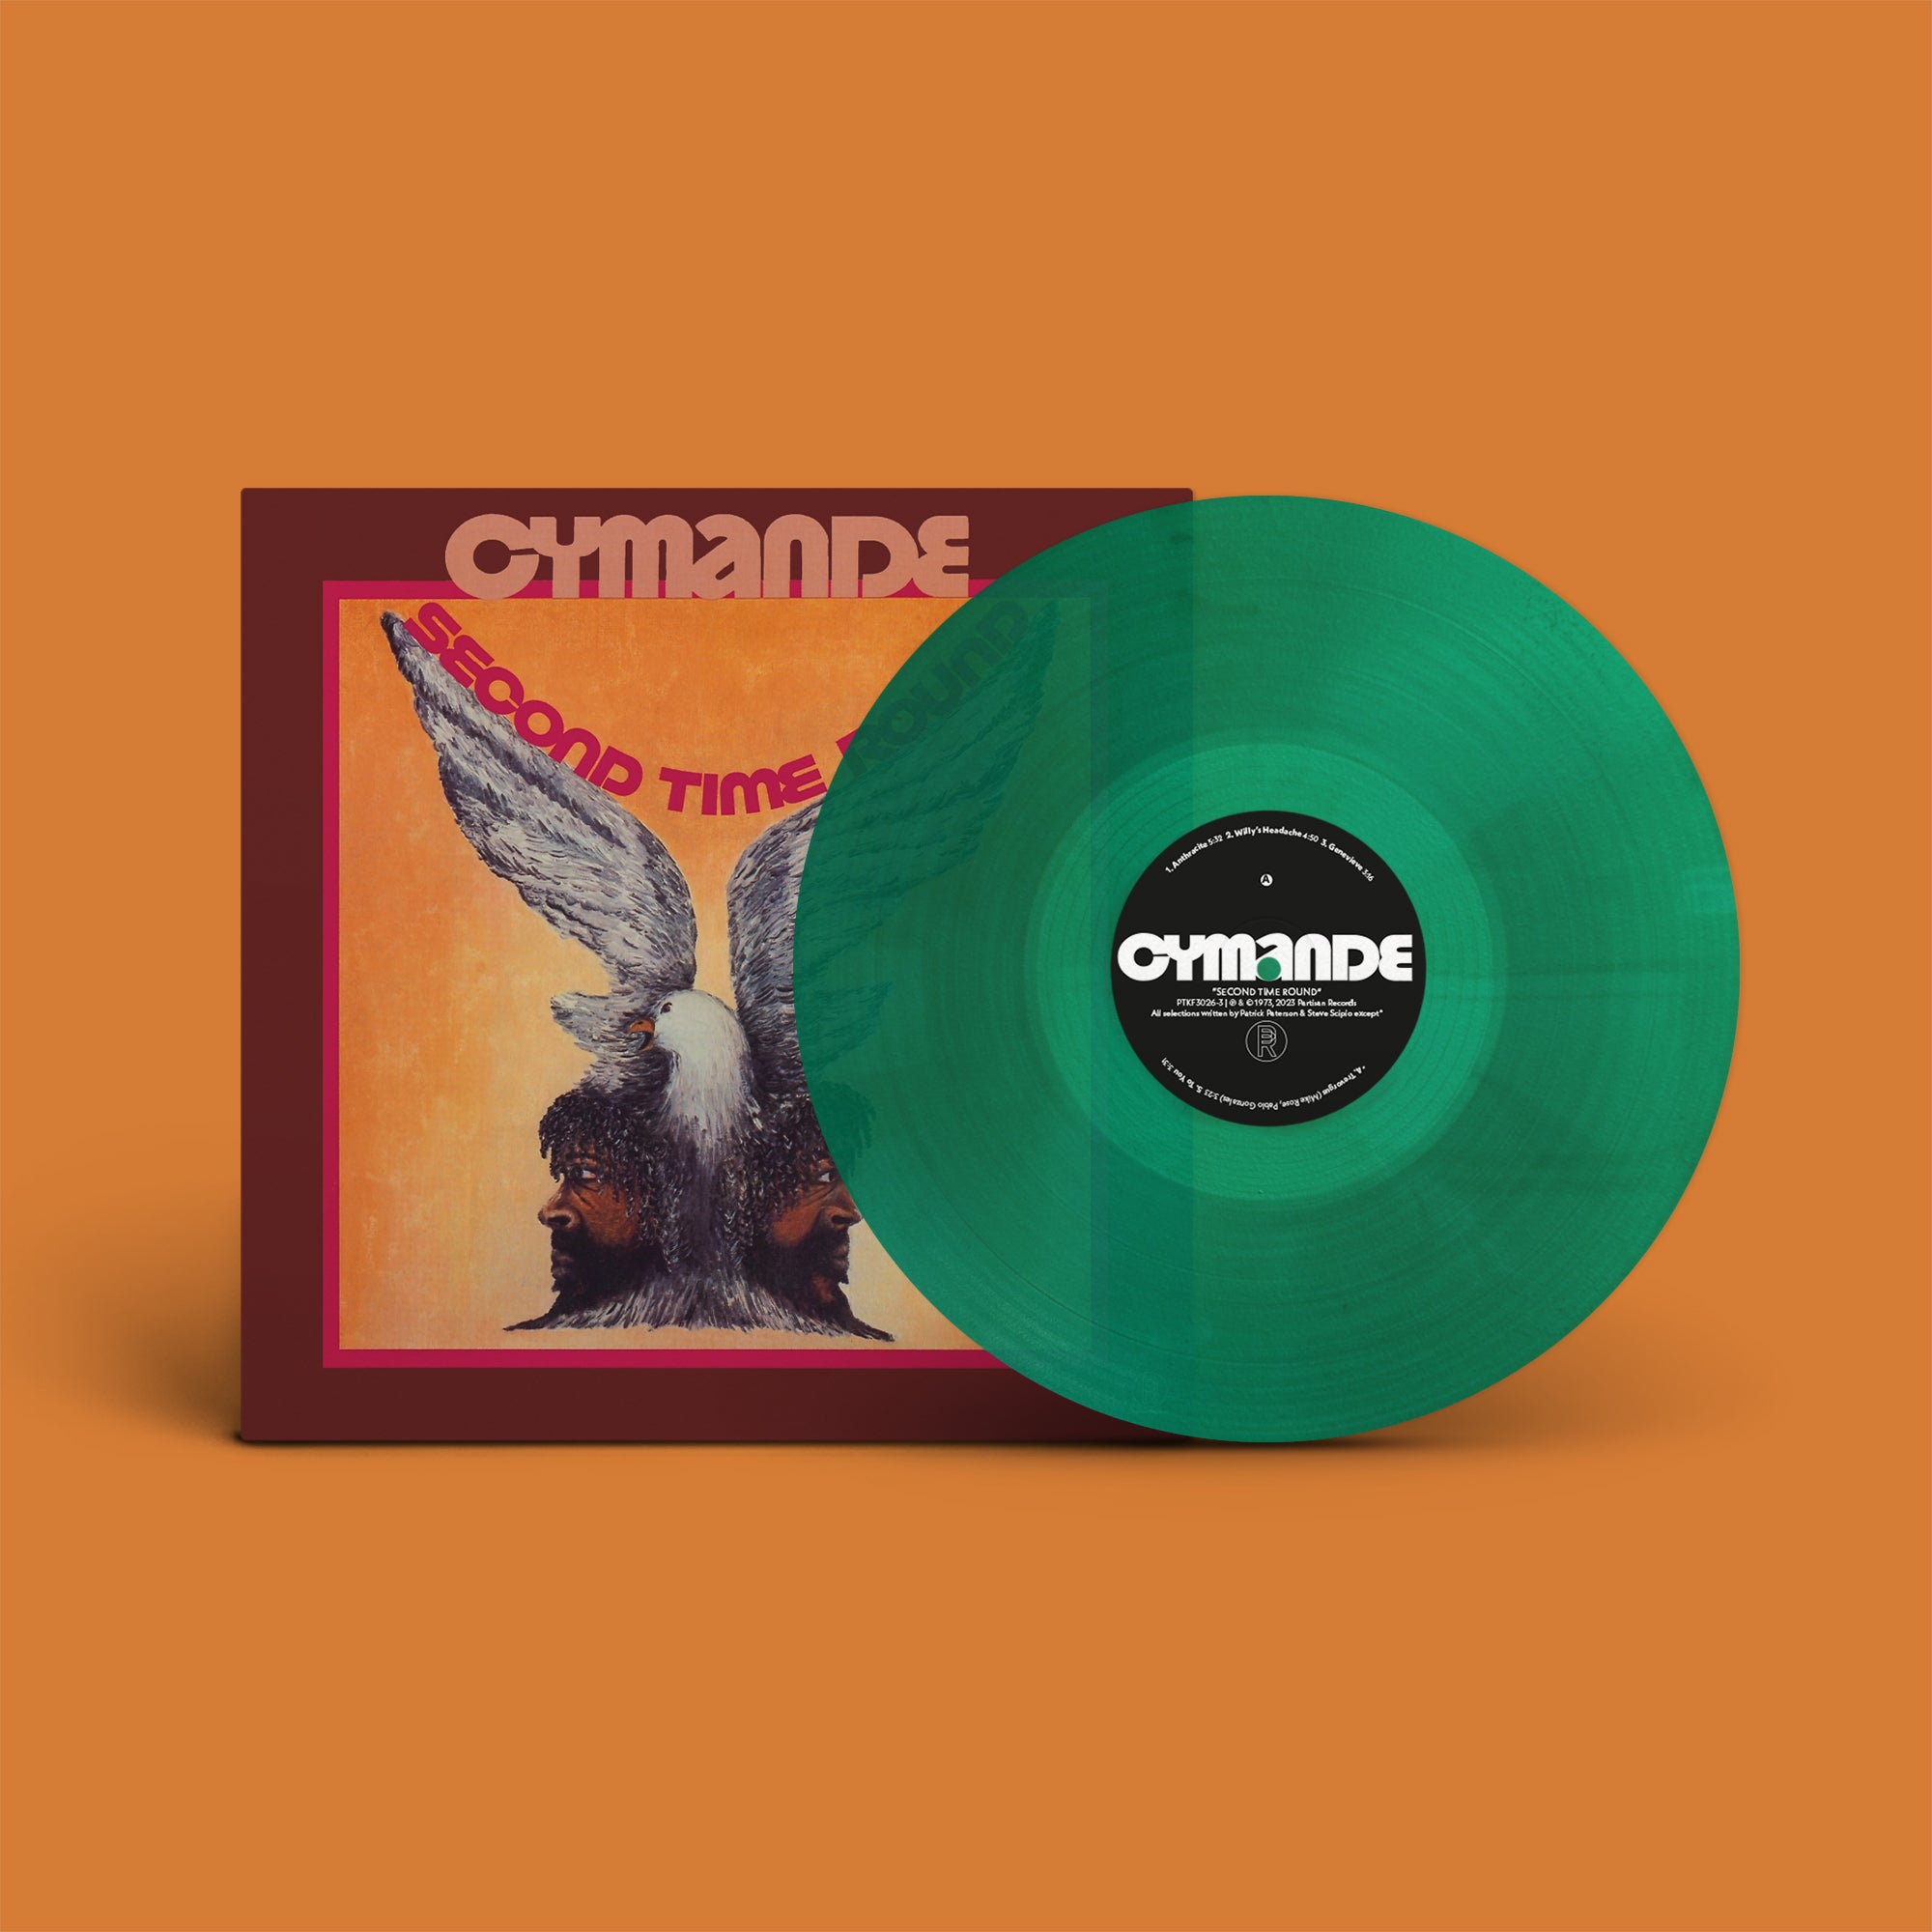 Cymande - Second Time Round: Limited Transparent Emerald Green Vinyl LP